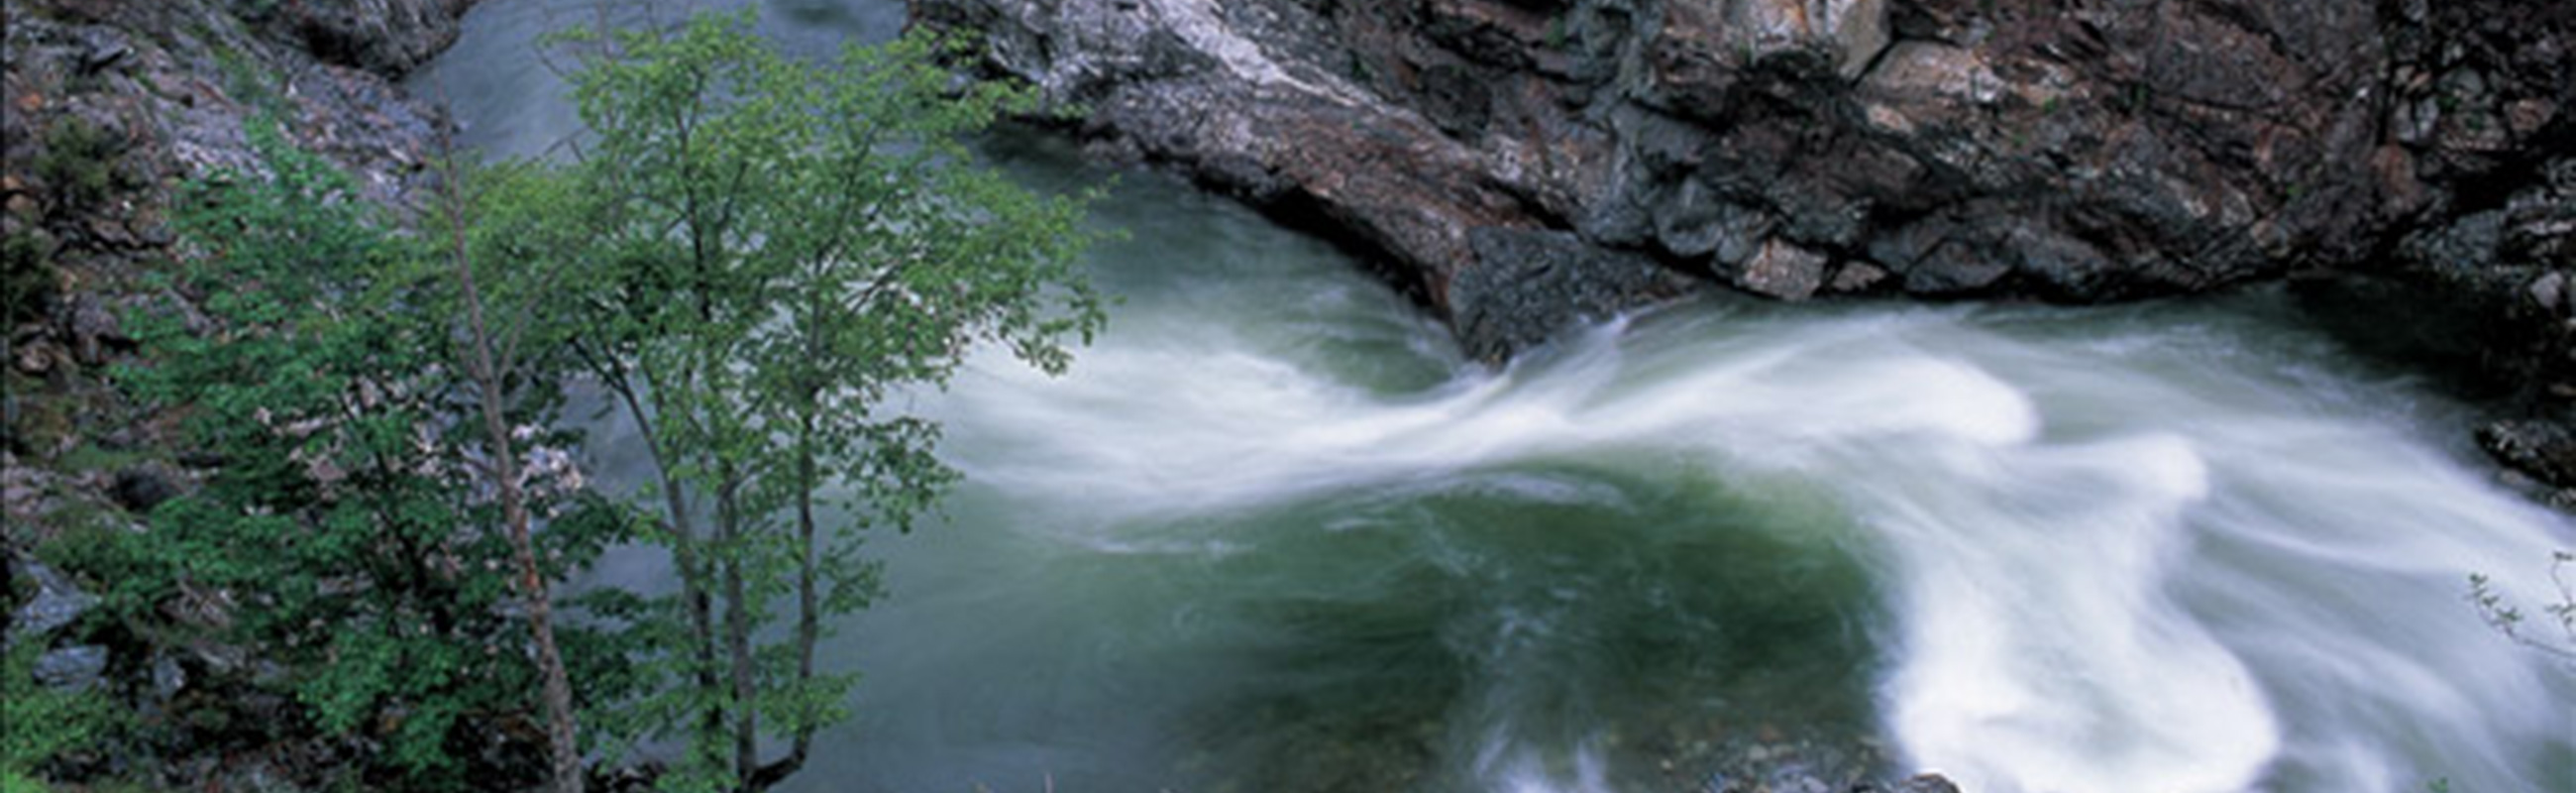 Image result for river